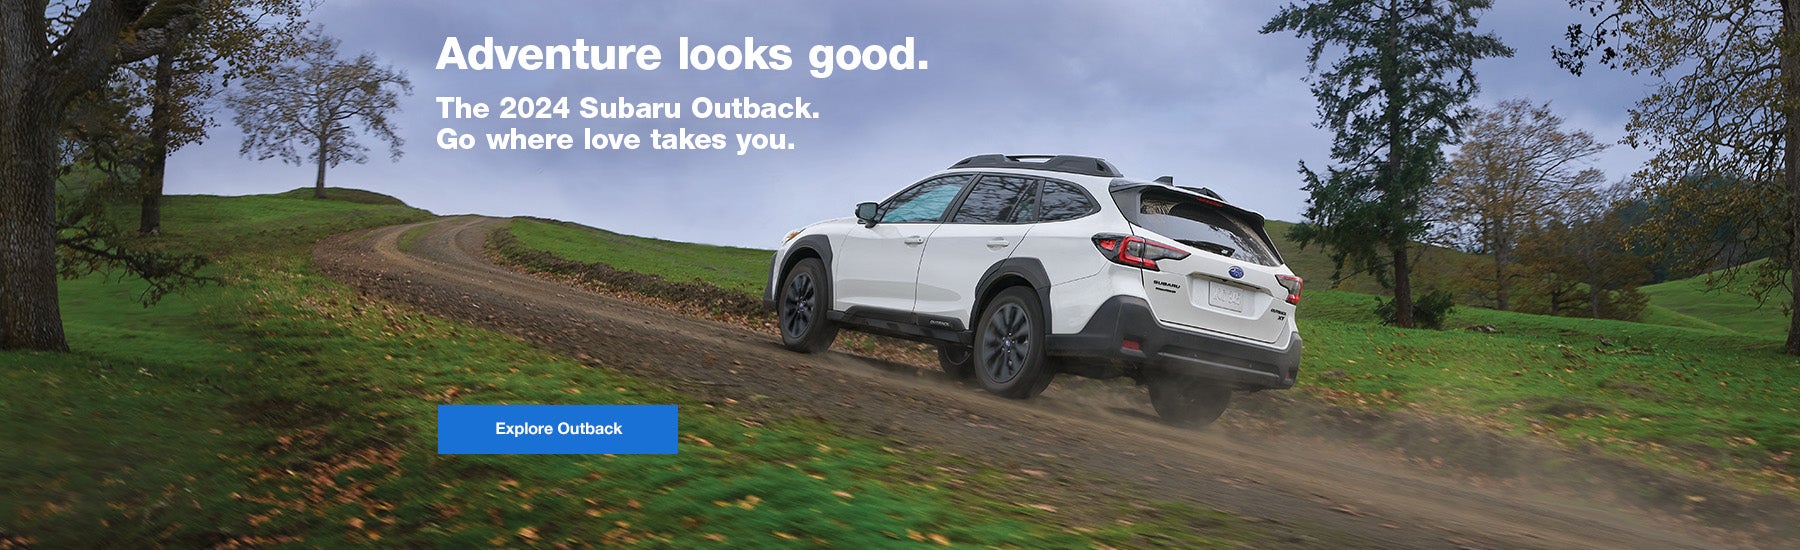 Subaru Outback- Explore